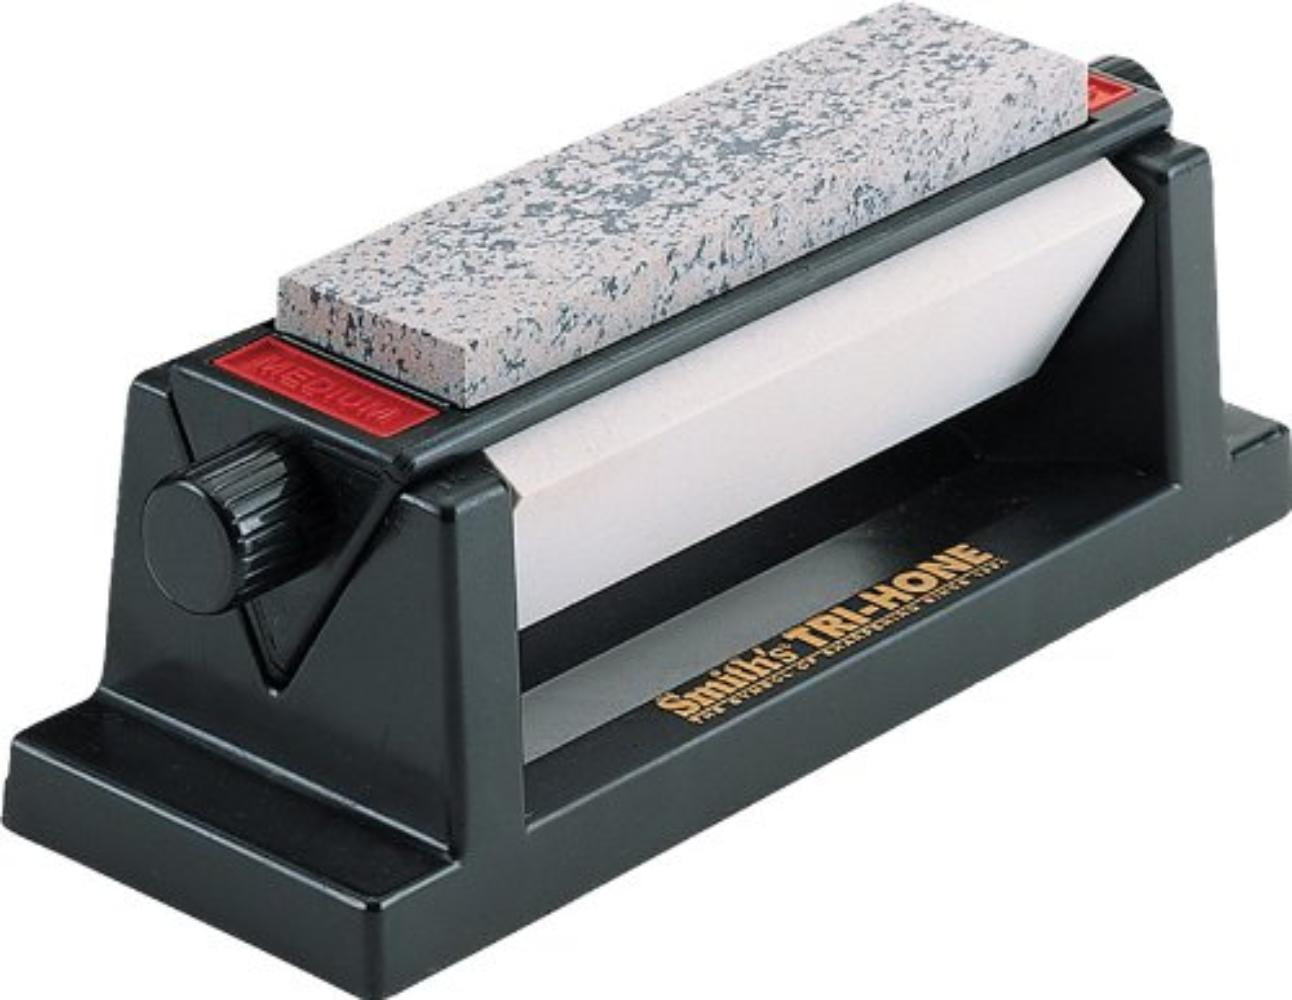 1xSharpening Grindstone Polishing Stone Grit 8000-10000 Sharpener System Graver 